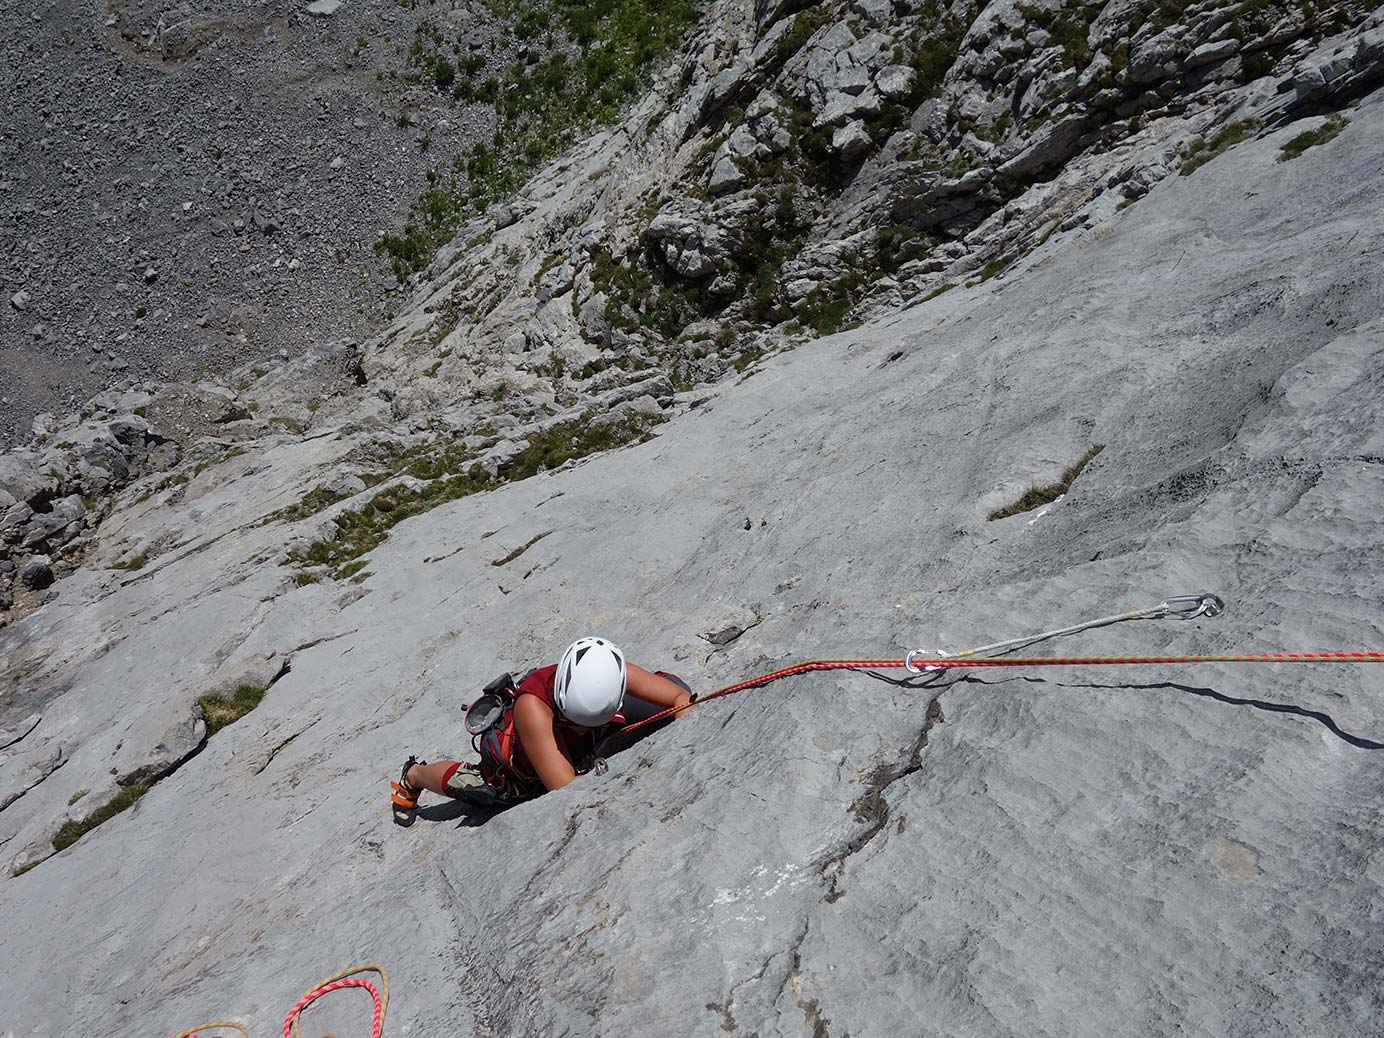 Alpinkletterkurs Advanced – be an expert!